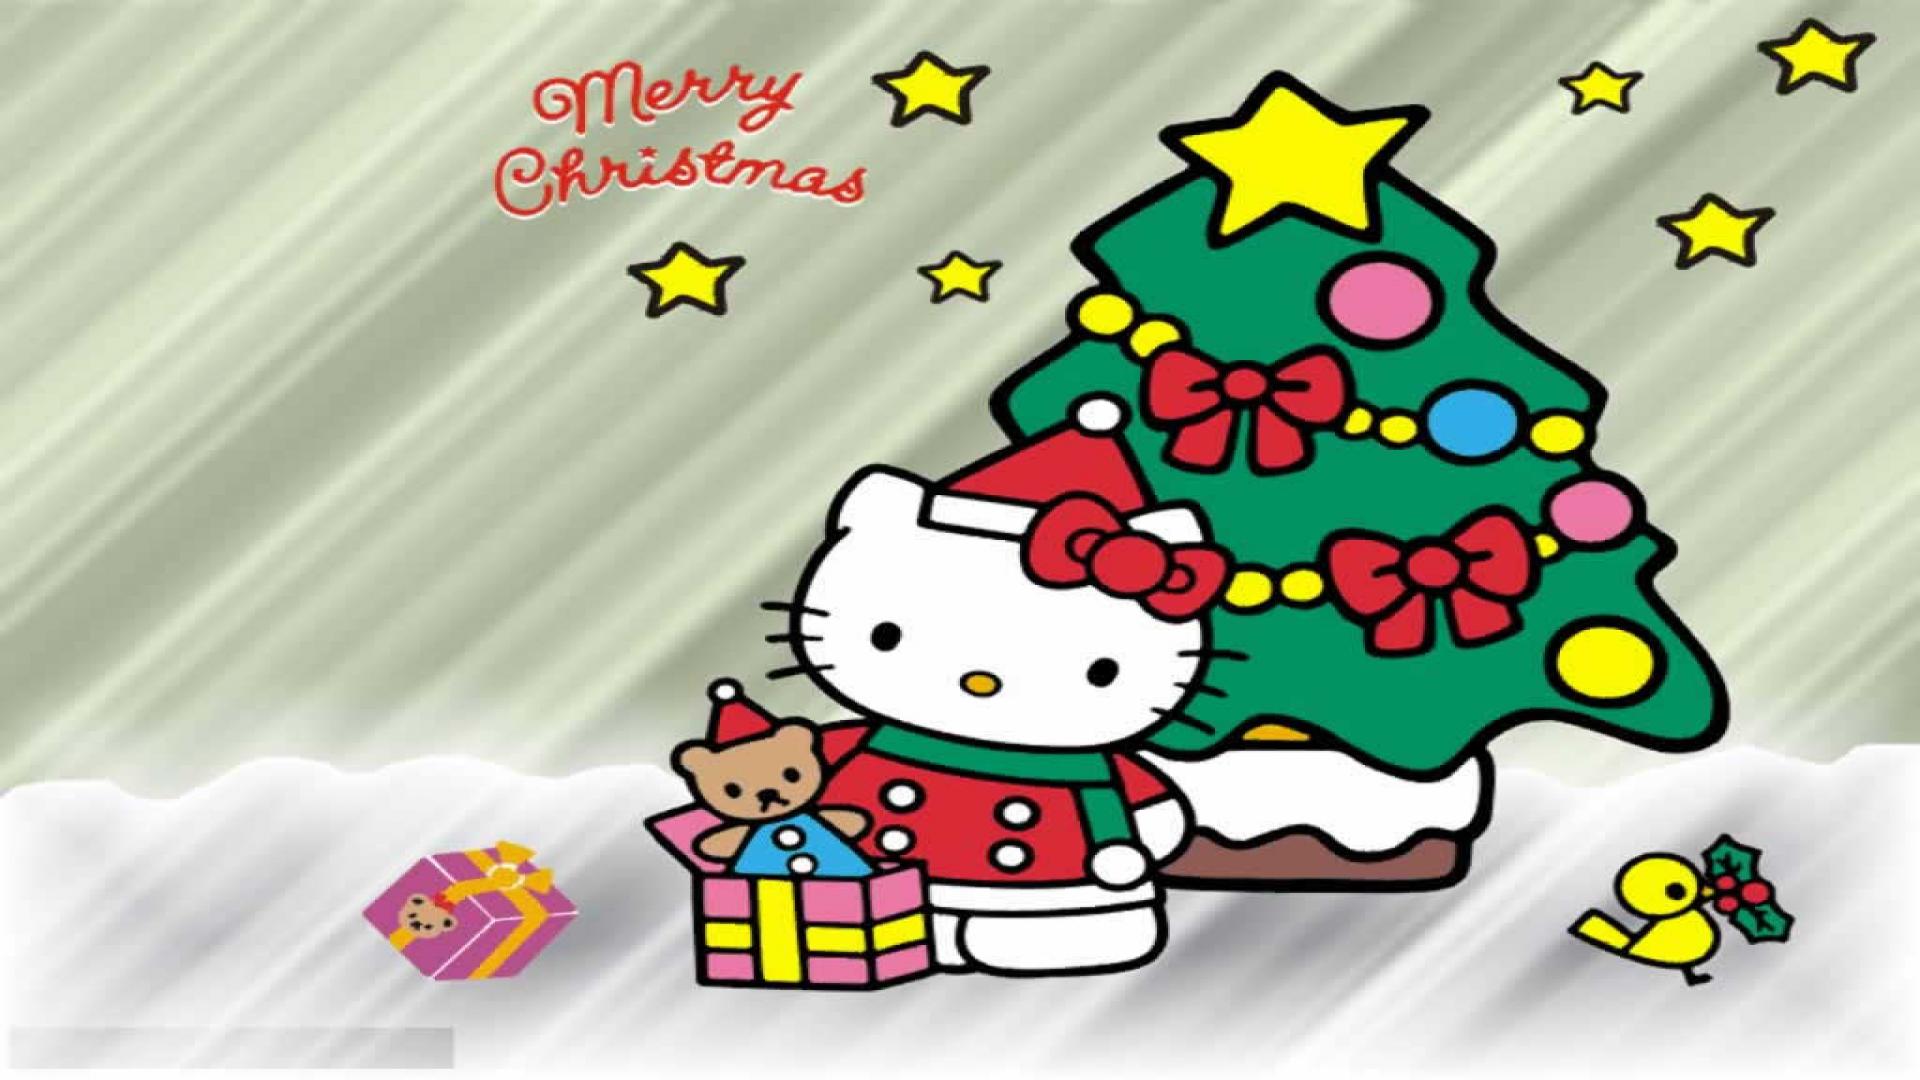 Hello Kitty Merry Christmas Wallpaper